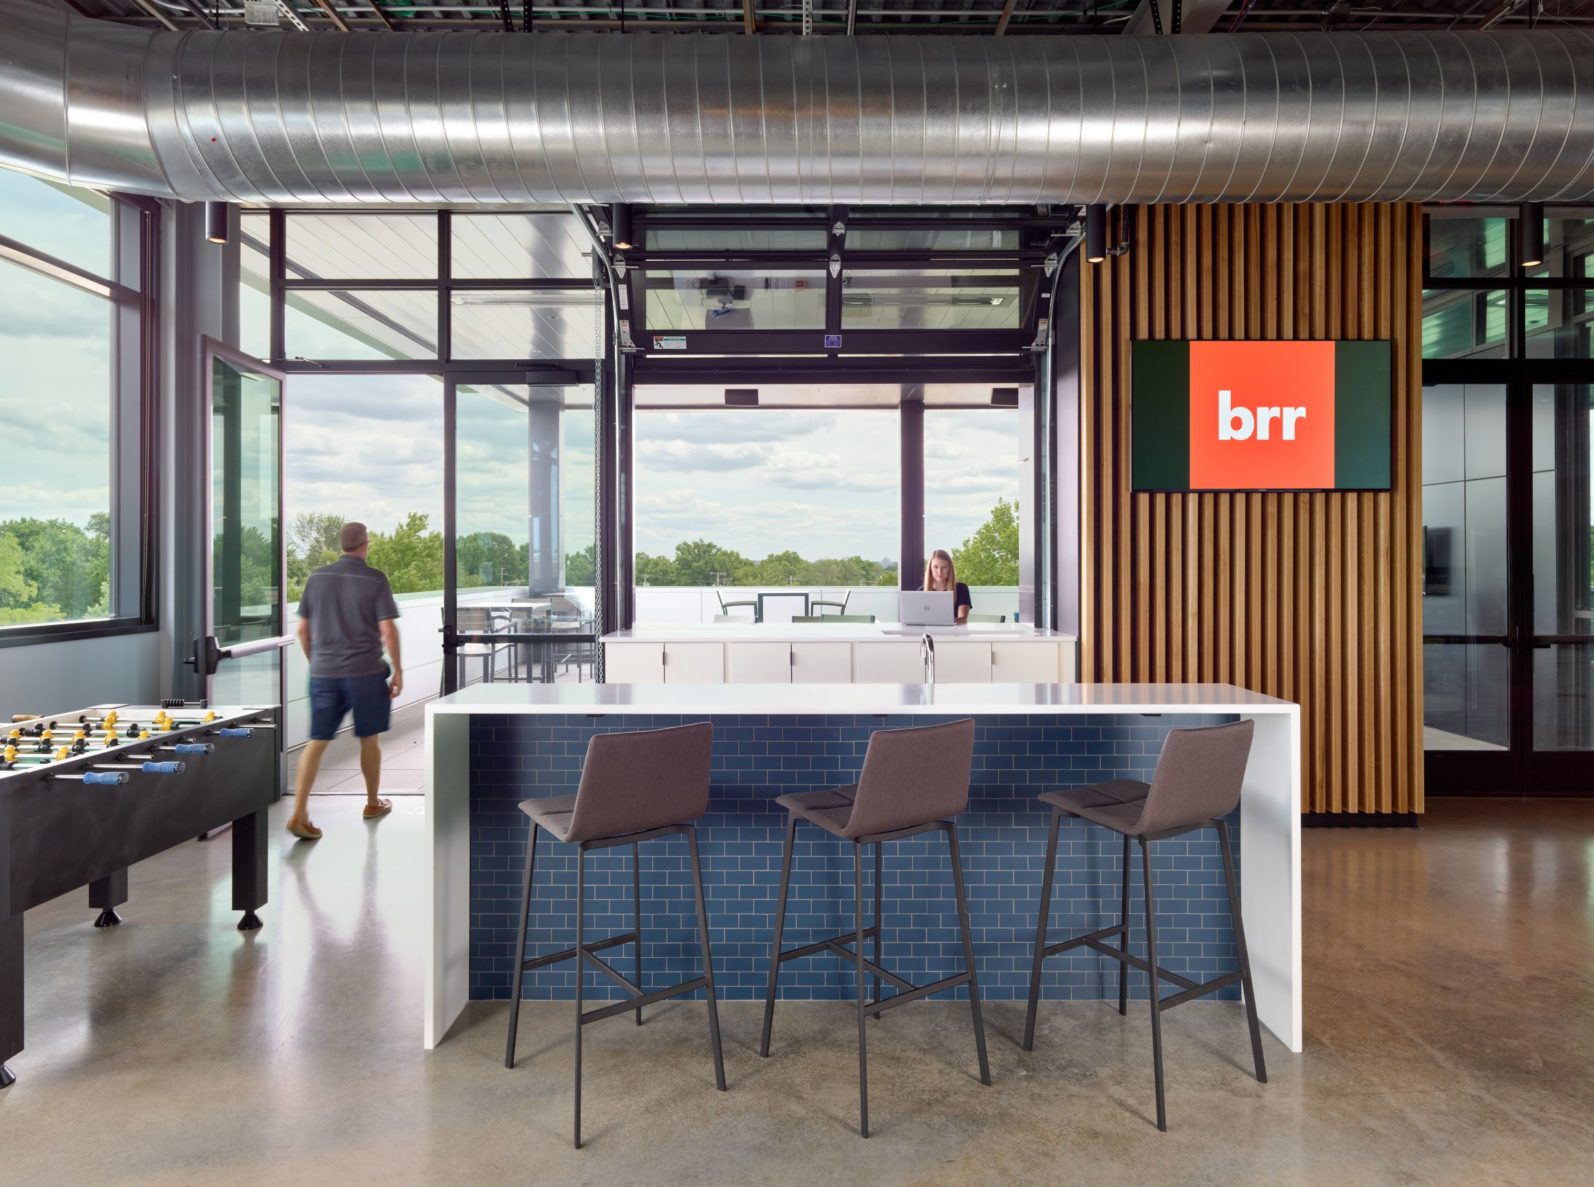 BRR architecture office in overland park, kansas